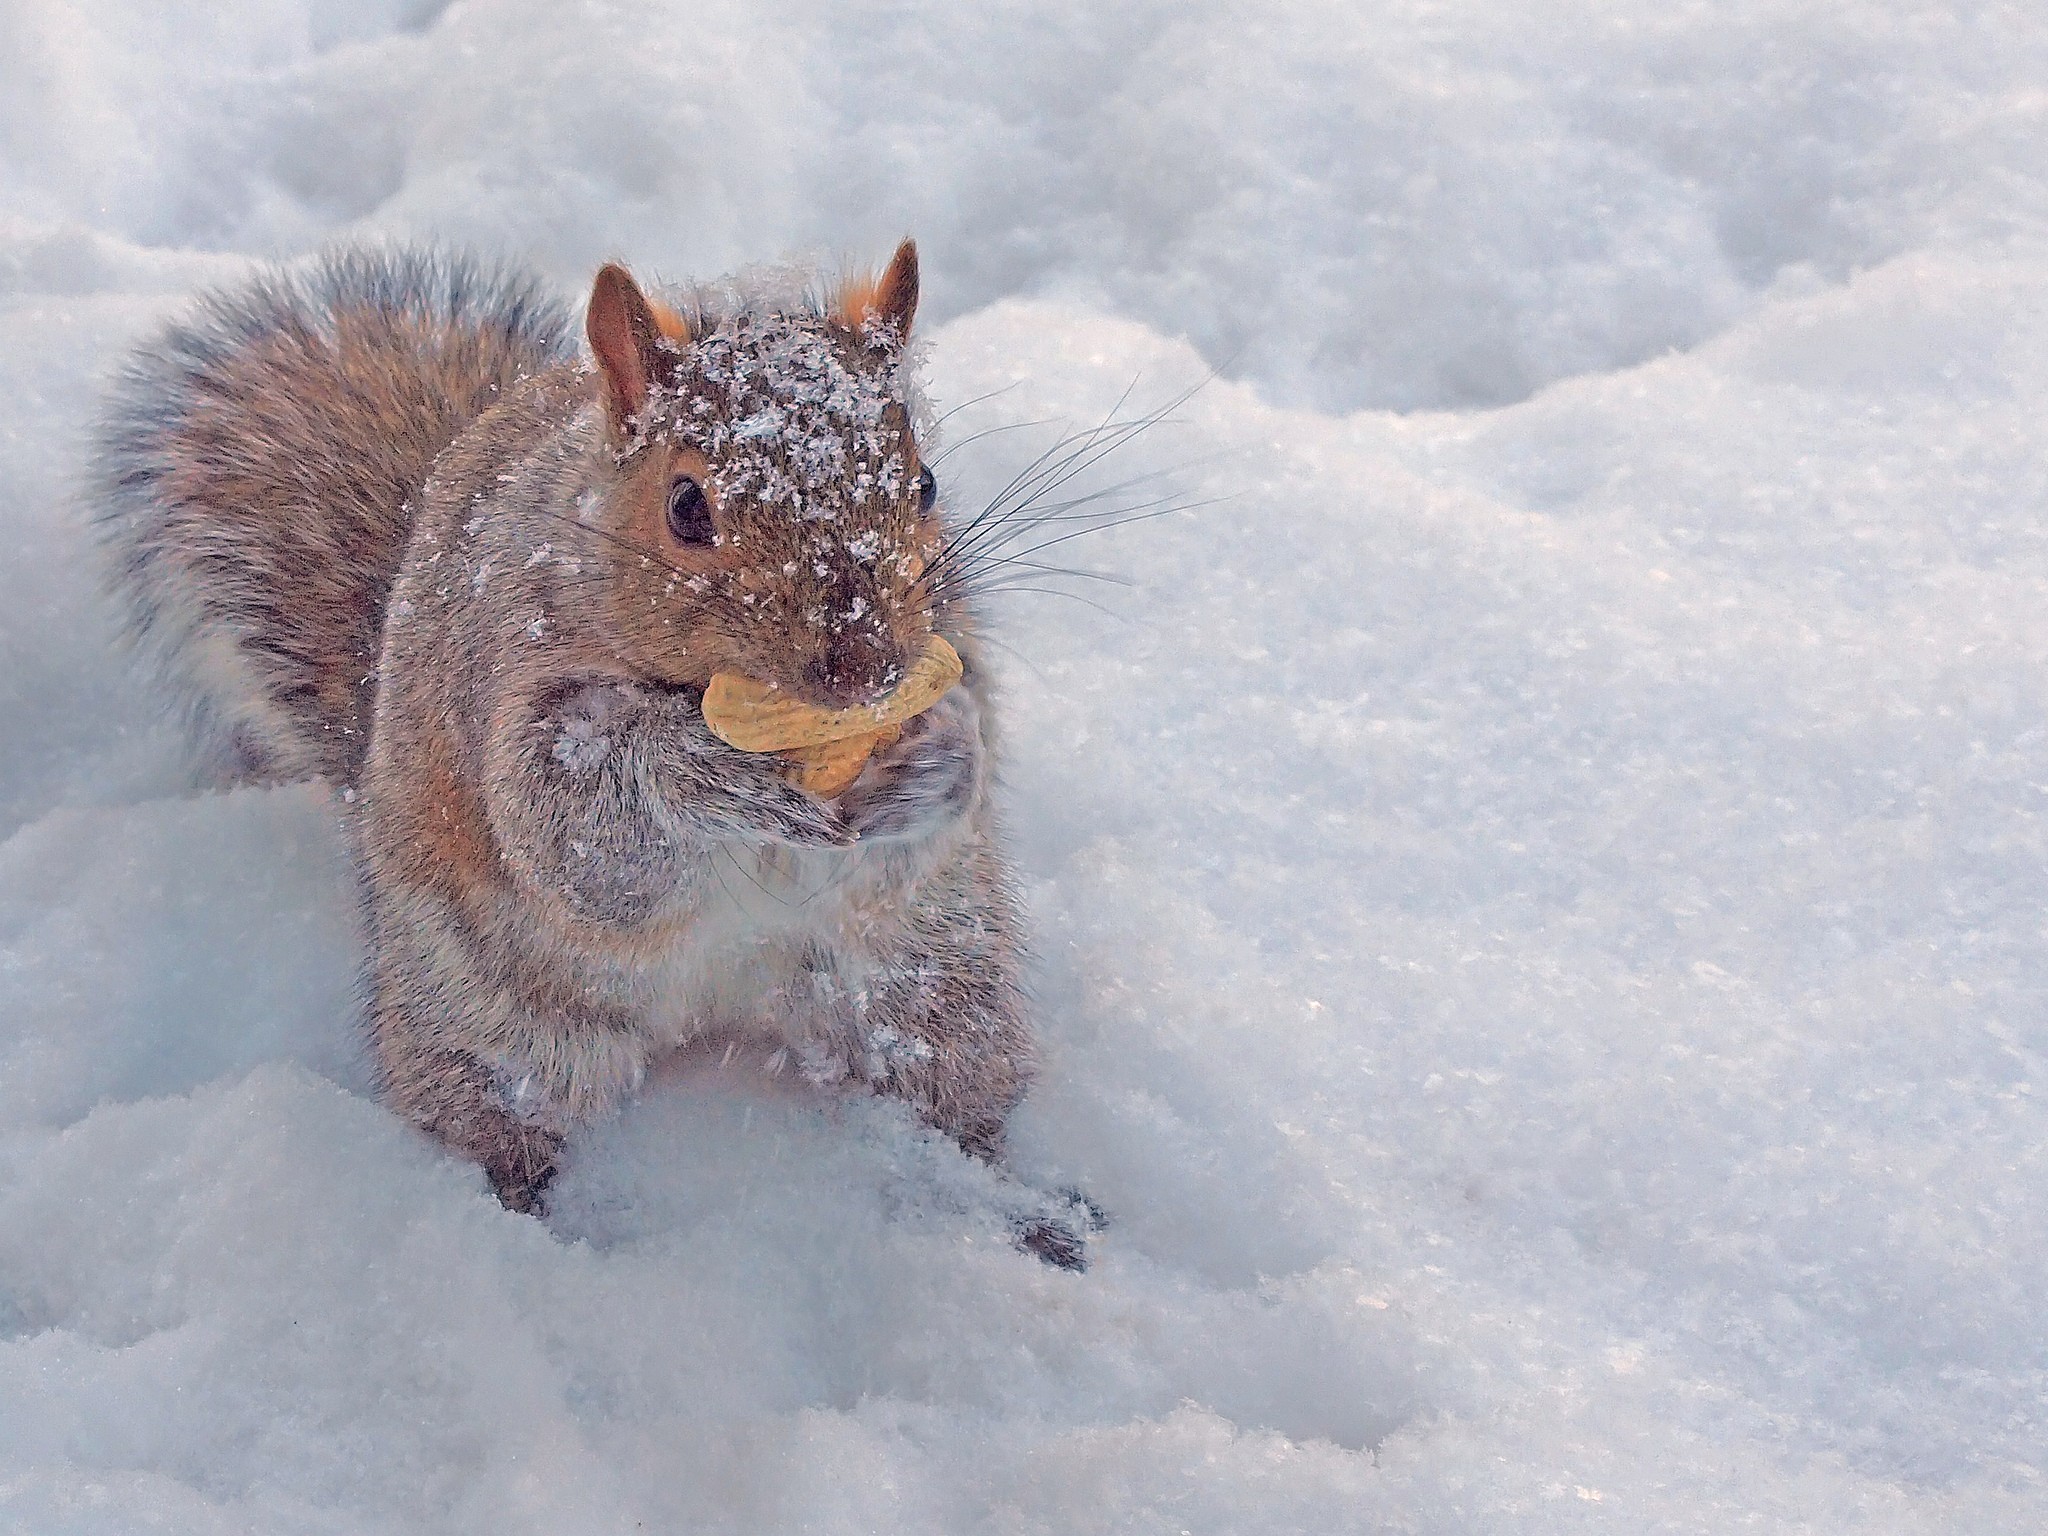 Squirrel with peanut in snow | Jim Bauer